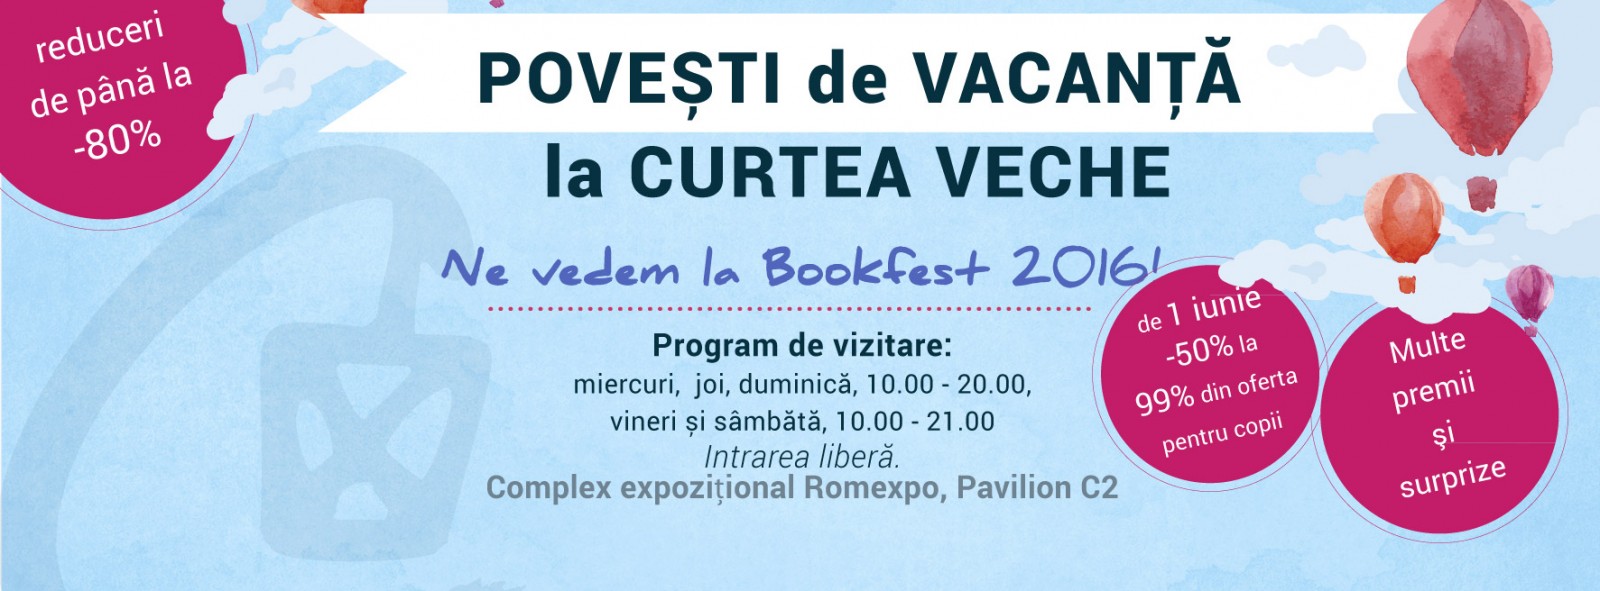 Evenimente Curtea Veche Publishing la Bookfest 2016